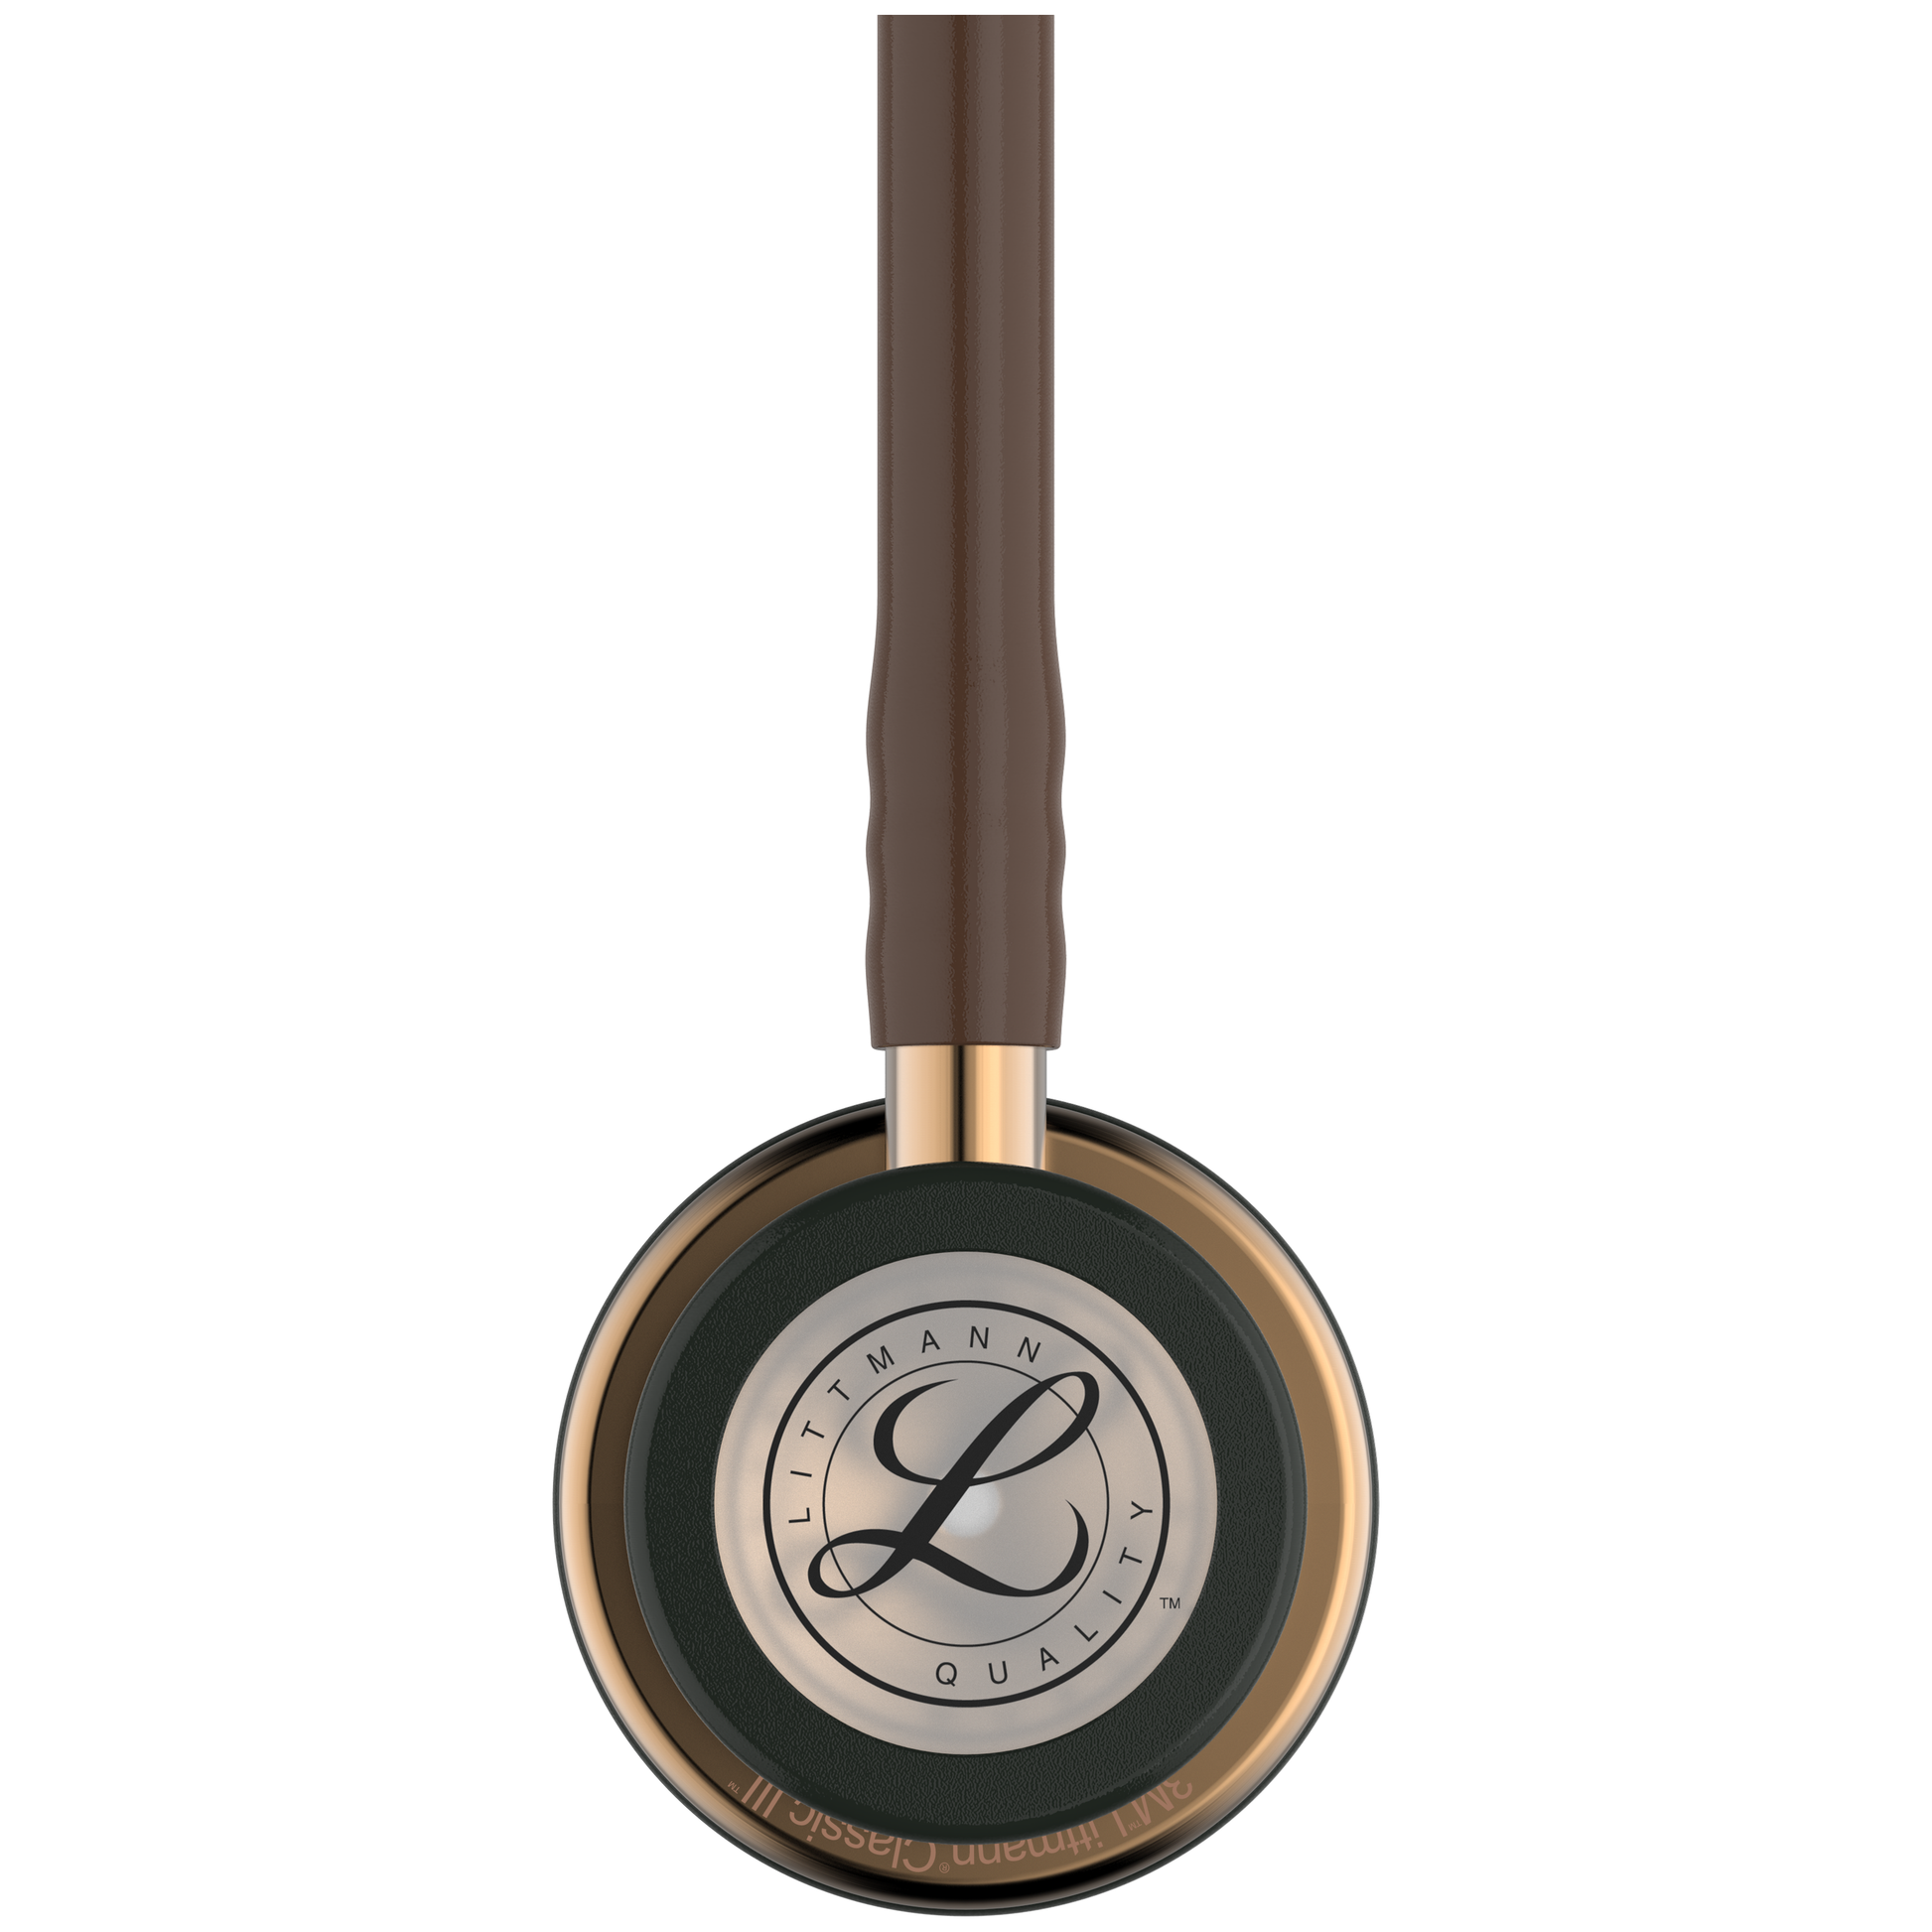 Littmann Classic III Stethoscope: Chocolate & Copper 5809 3M Littmann